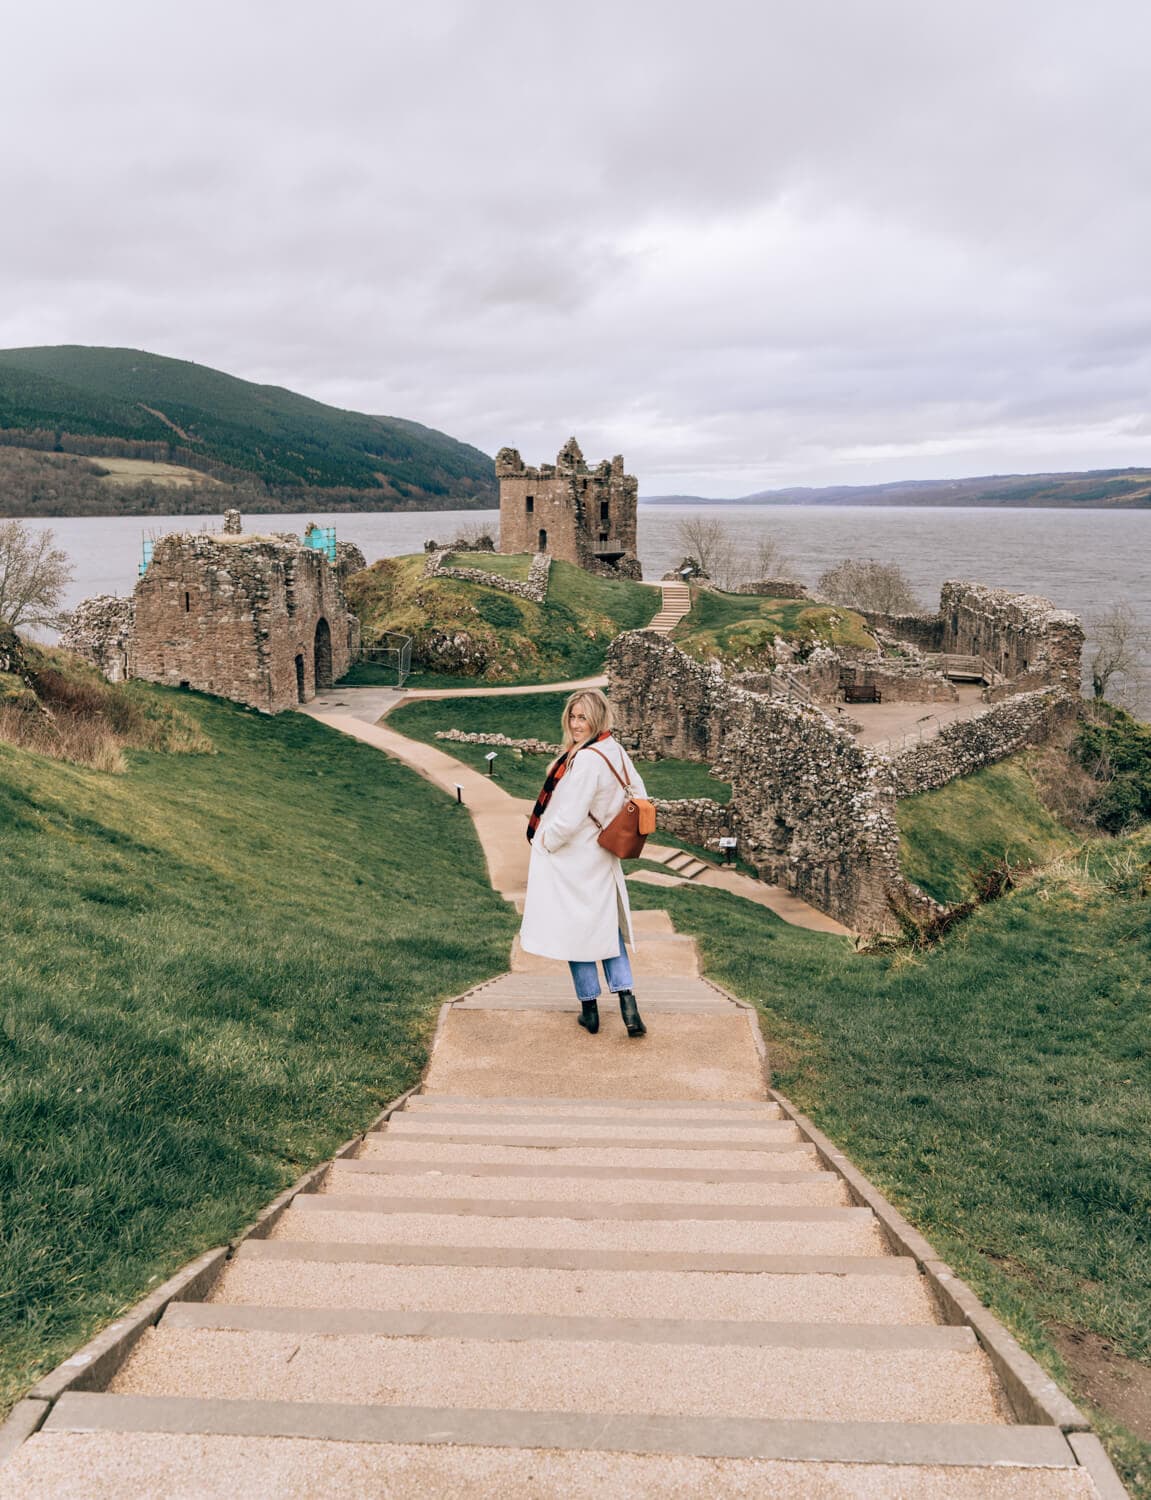 7 days Scottish Highlands | One week Scotland itinerary | Scotland travel tips | Inverness, Scotland | Scotland castles | Isle of Skye | Scotland road trip | What to do in Scotland | Scotland travel inspiration 